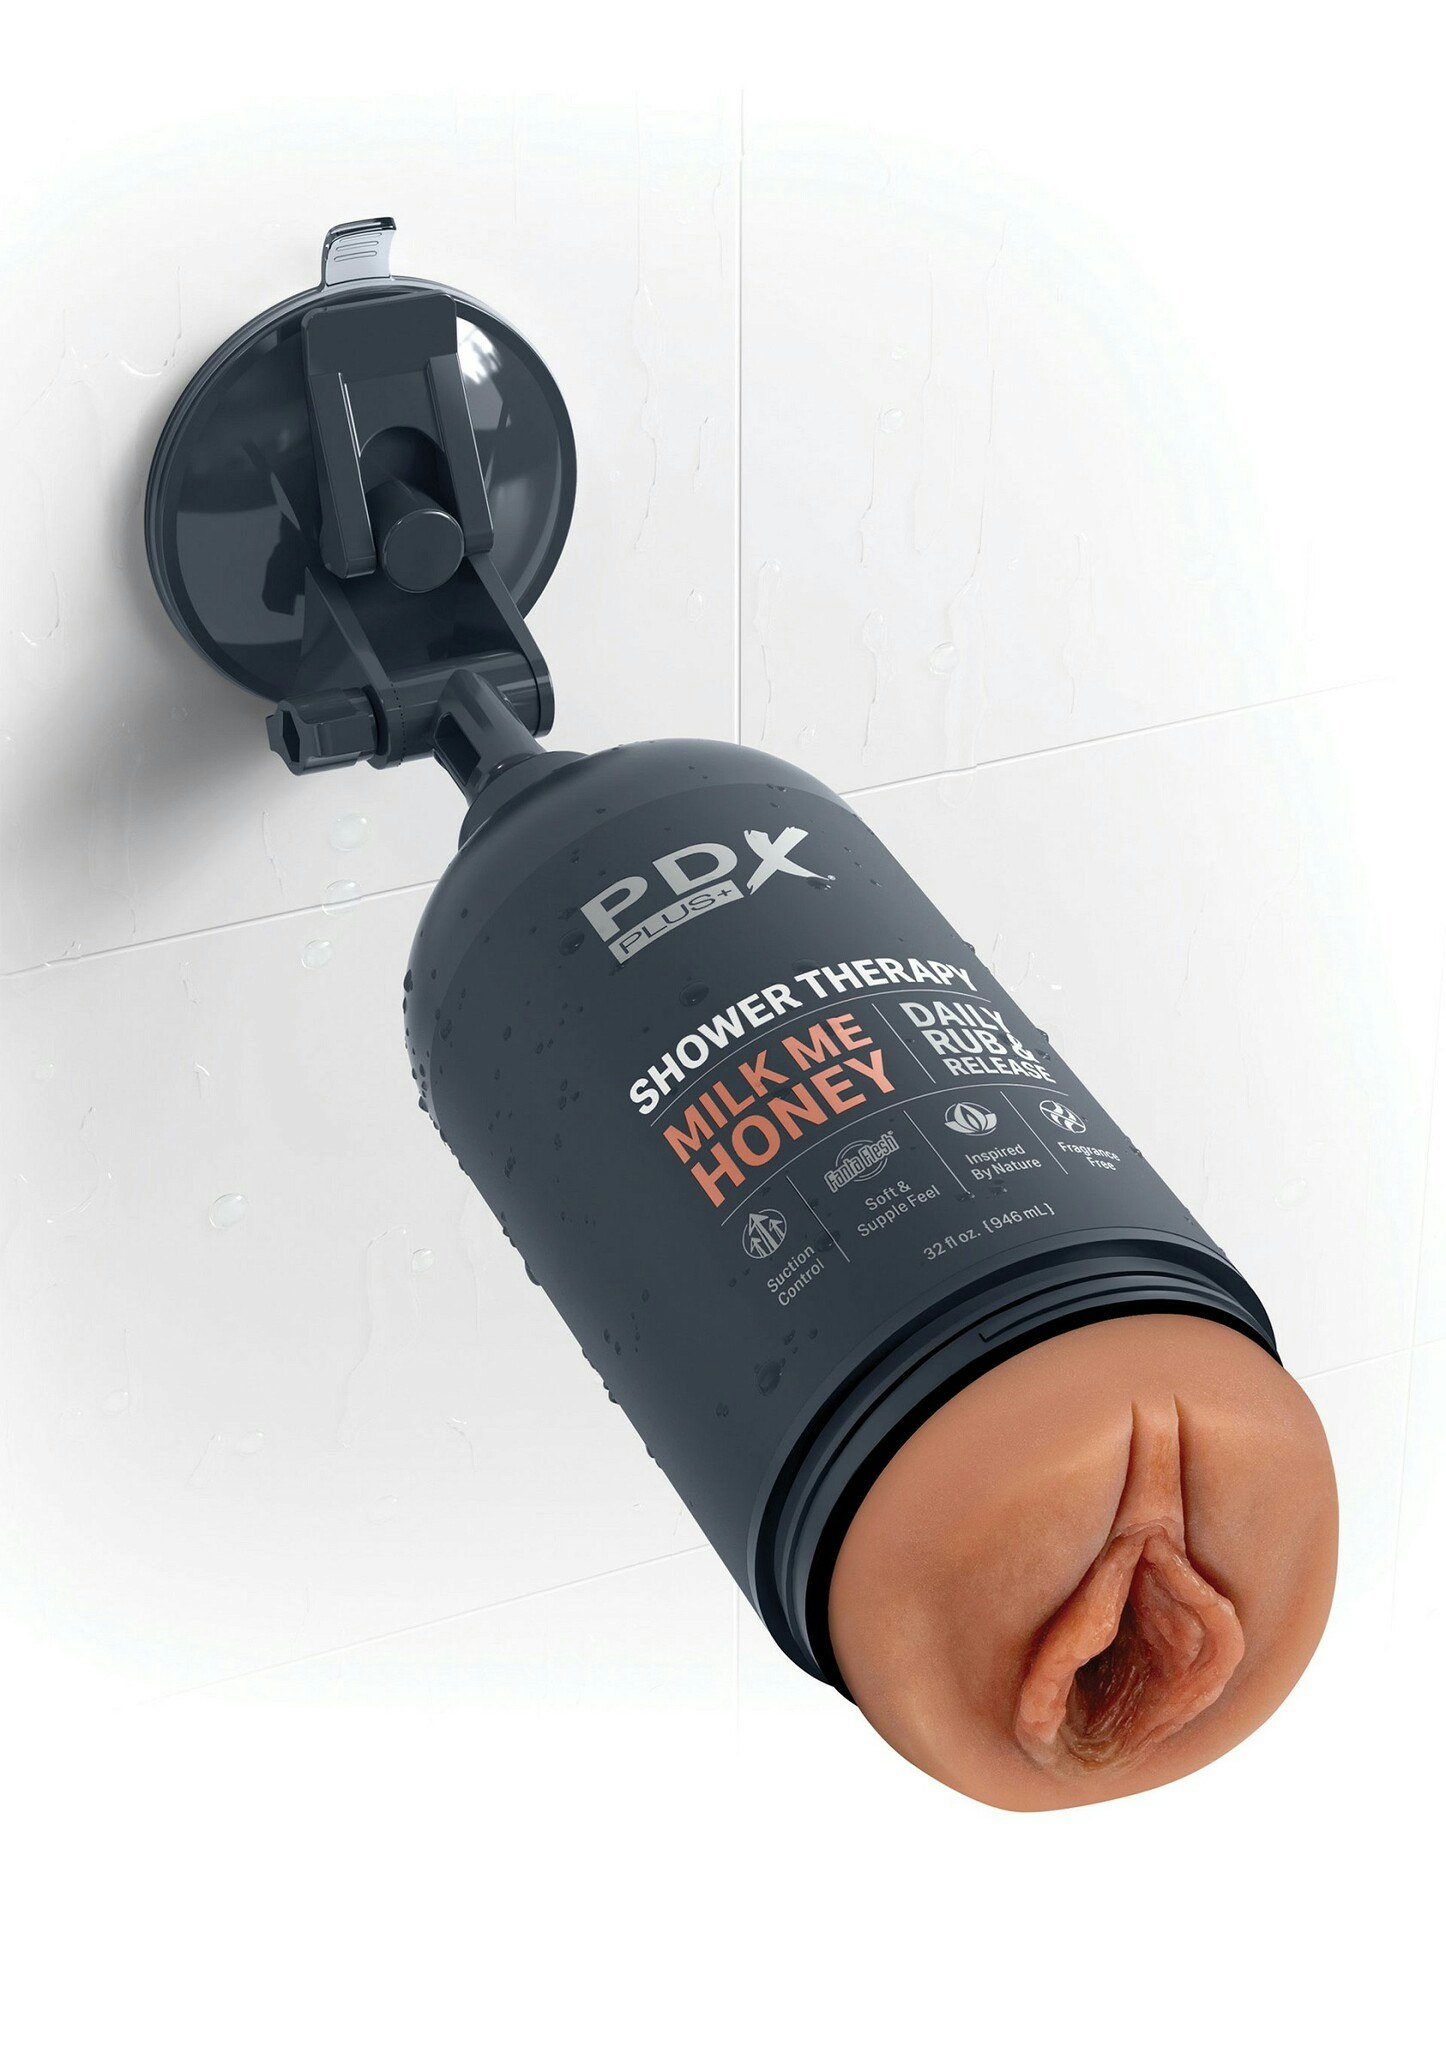 PDX Plus - Shower Therapy Milk Me Honey, Caramel skin tone